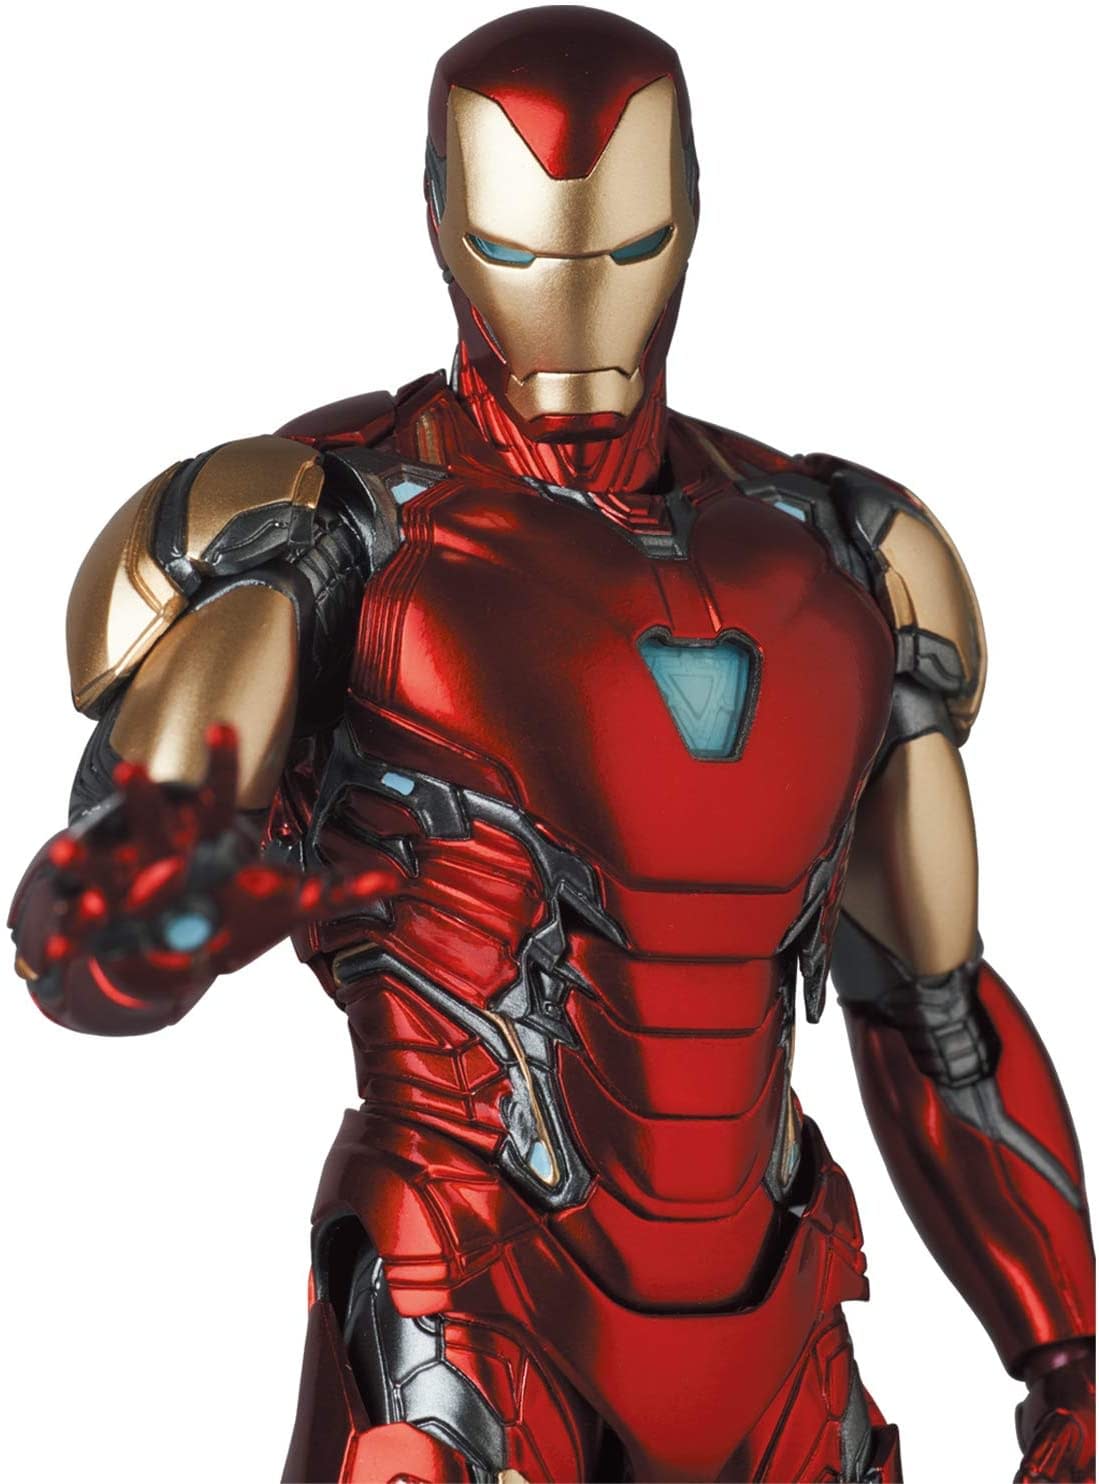 Medicom Updates Their Iron Man Mark 85 MAFEX Figure